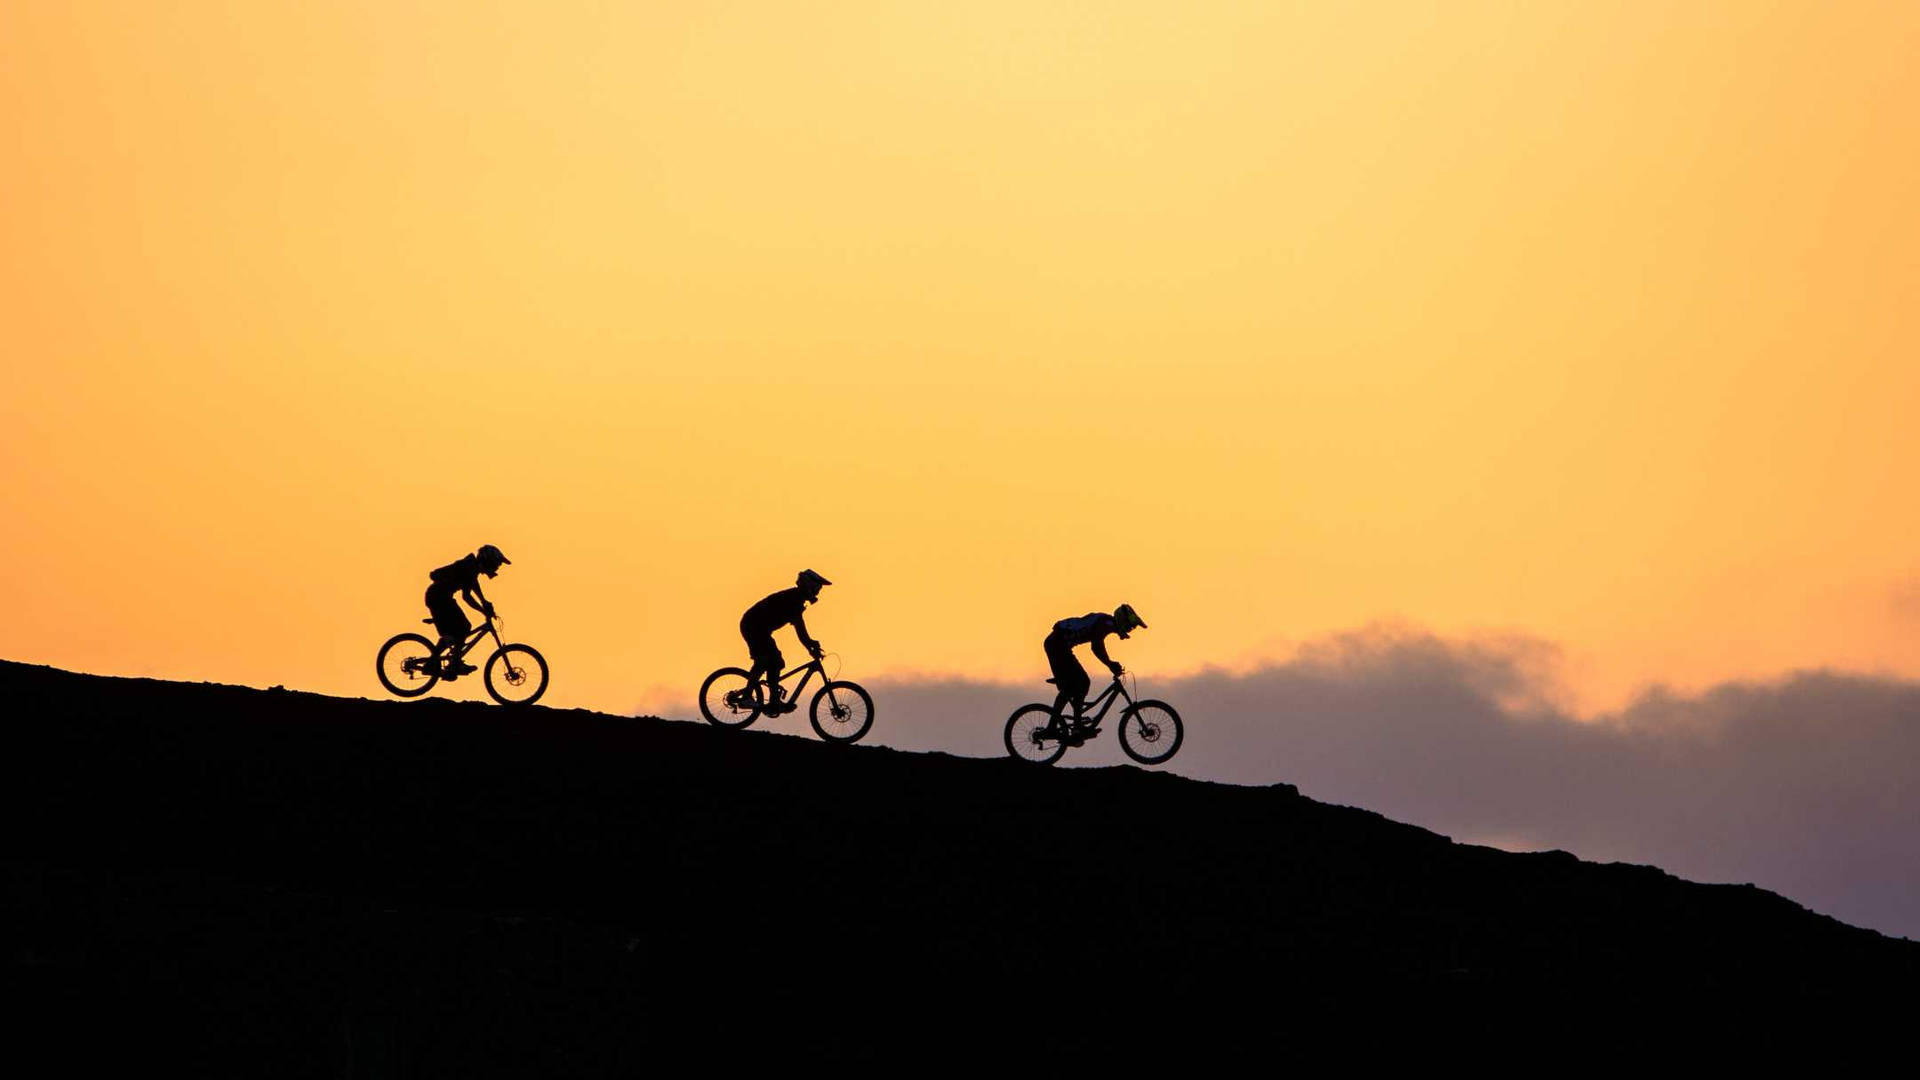 Group Of Cyclists Hillside Mountain Biking Silhouette Wallpaper